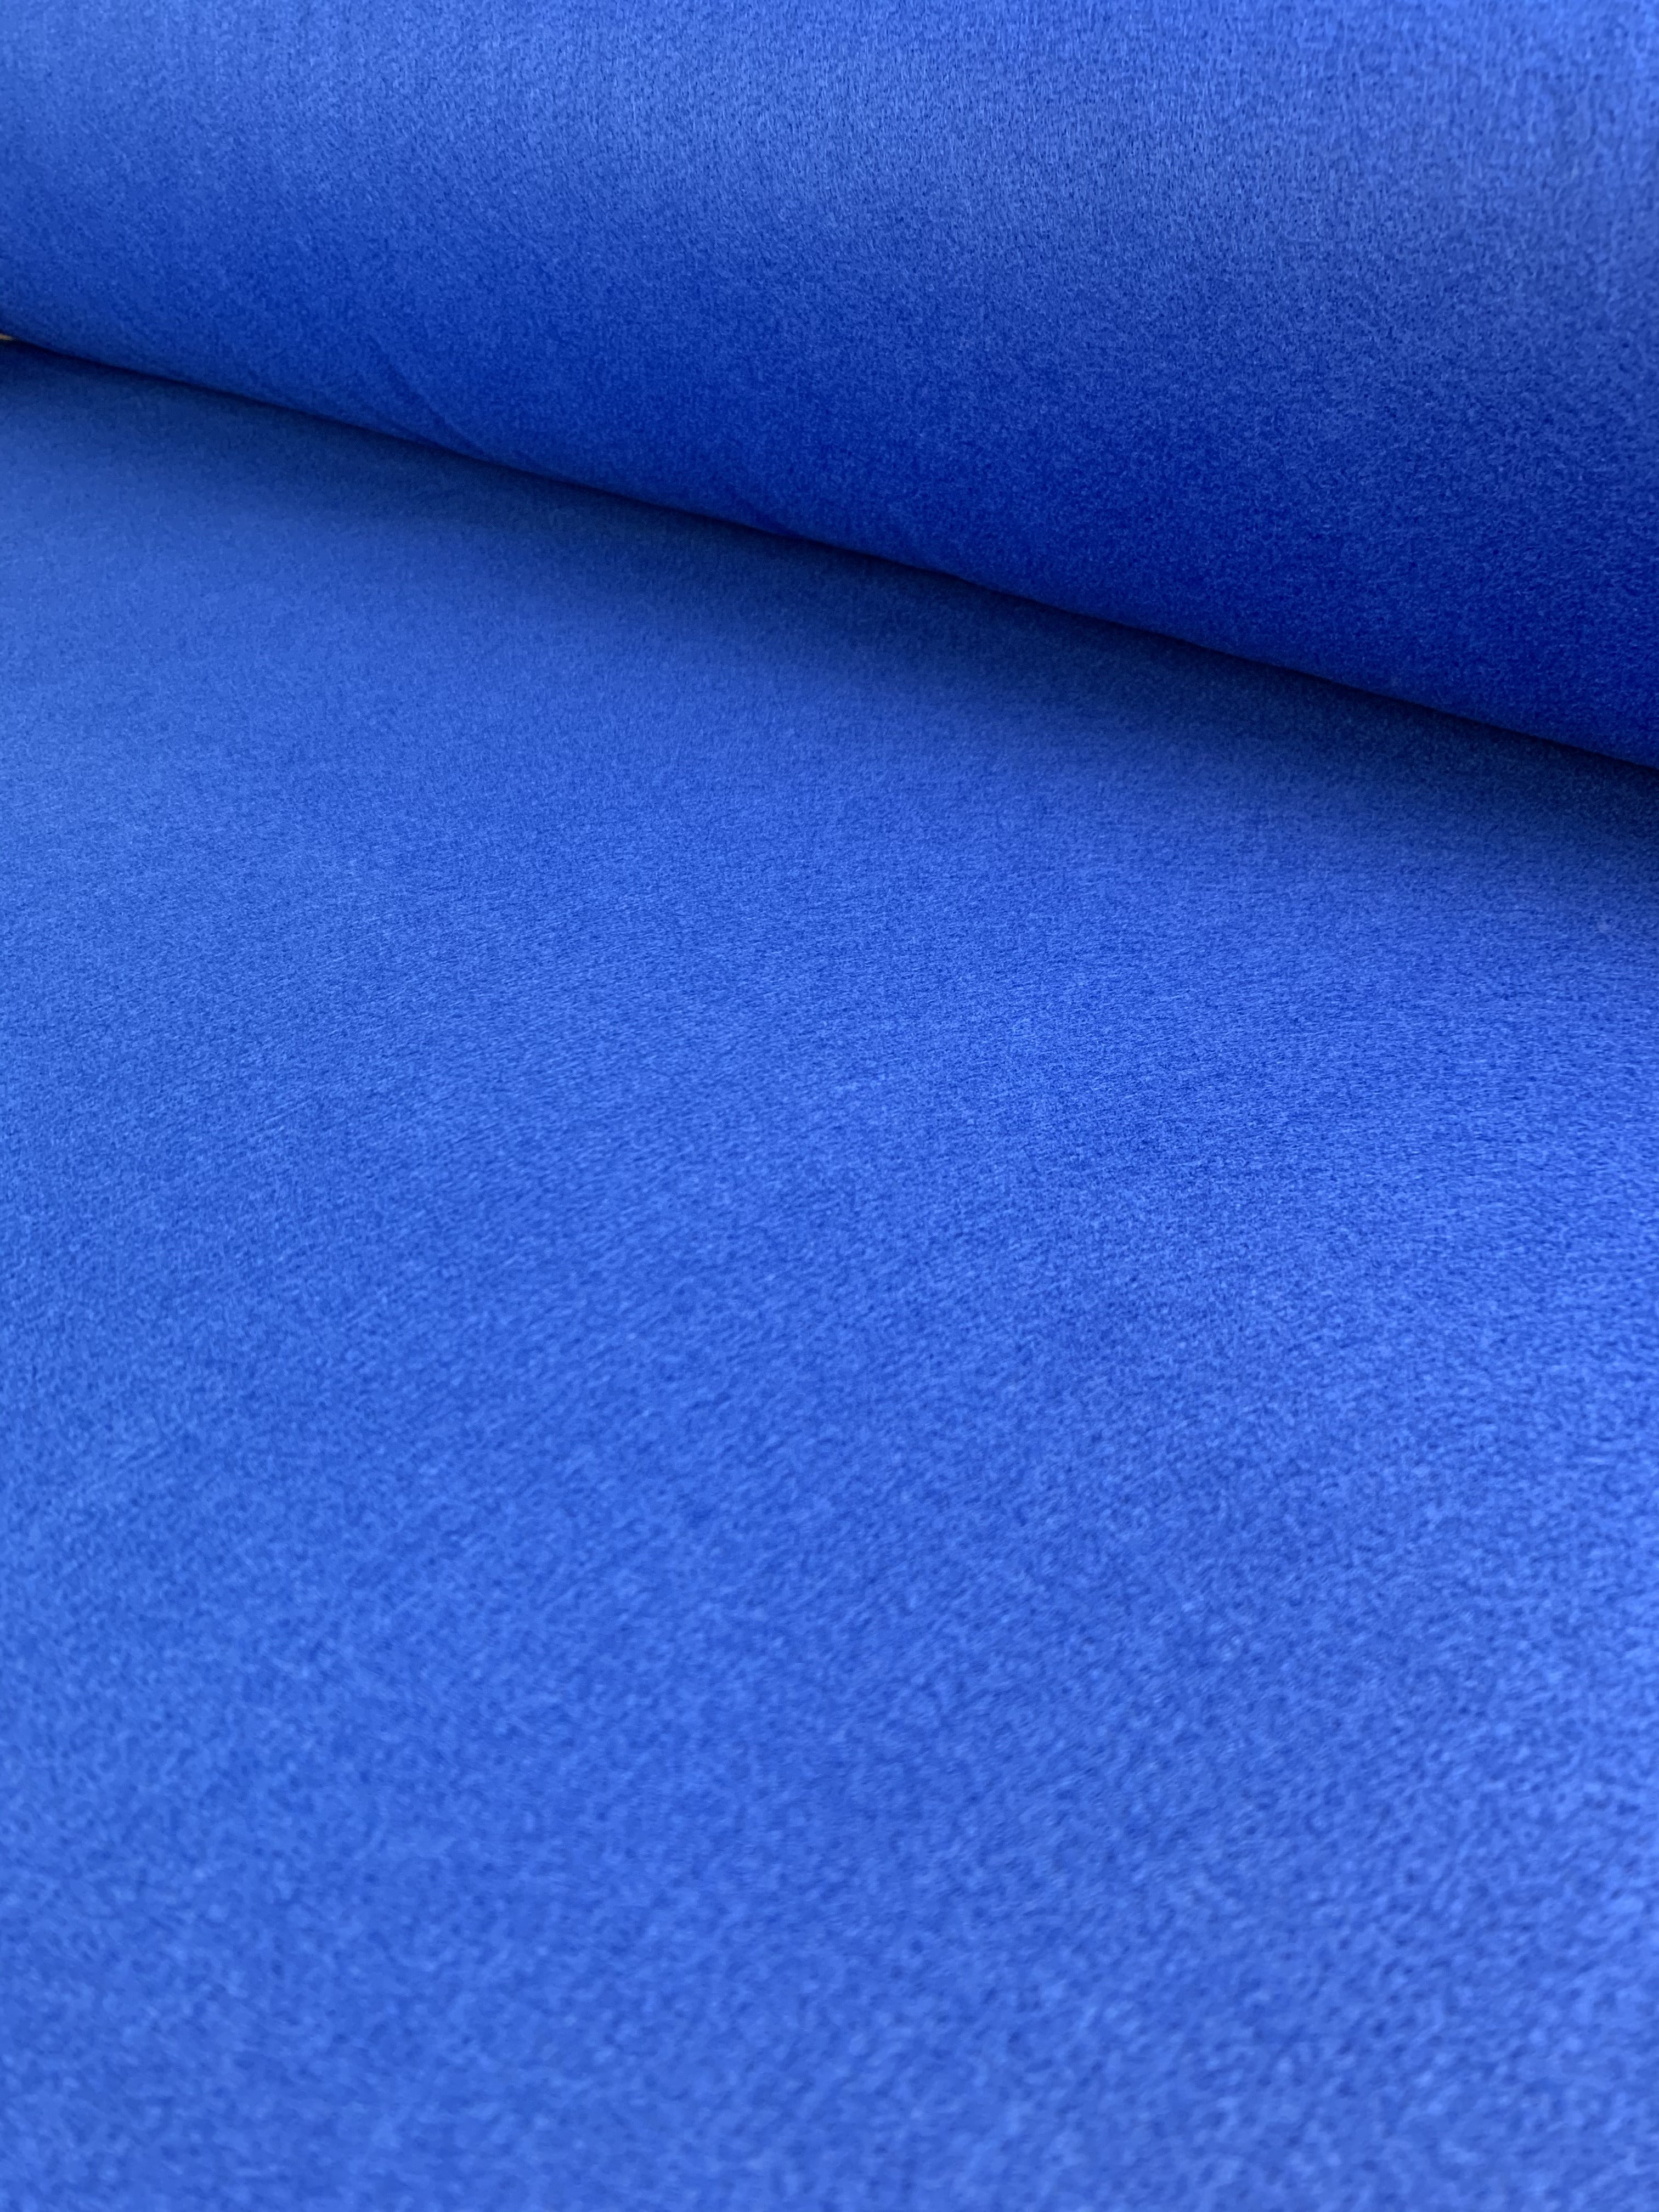 Royal Blue Acrylic Felt Fabric by the Yard Crafts Fabric 72 Inches